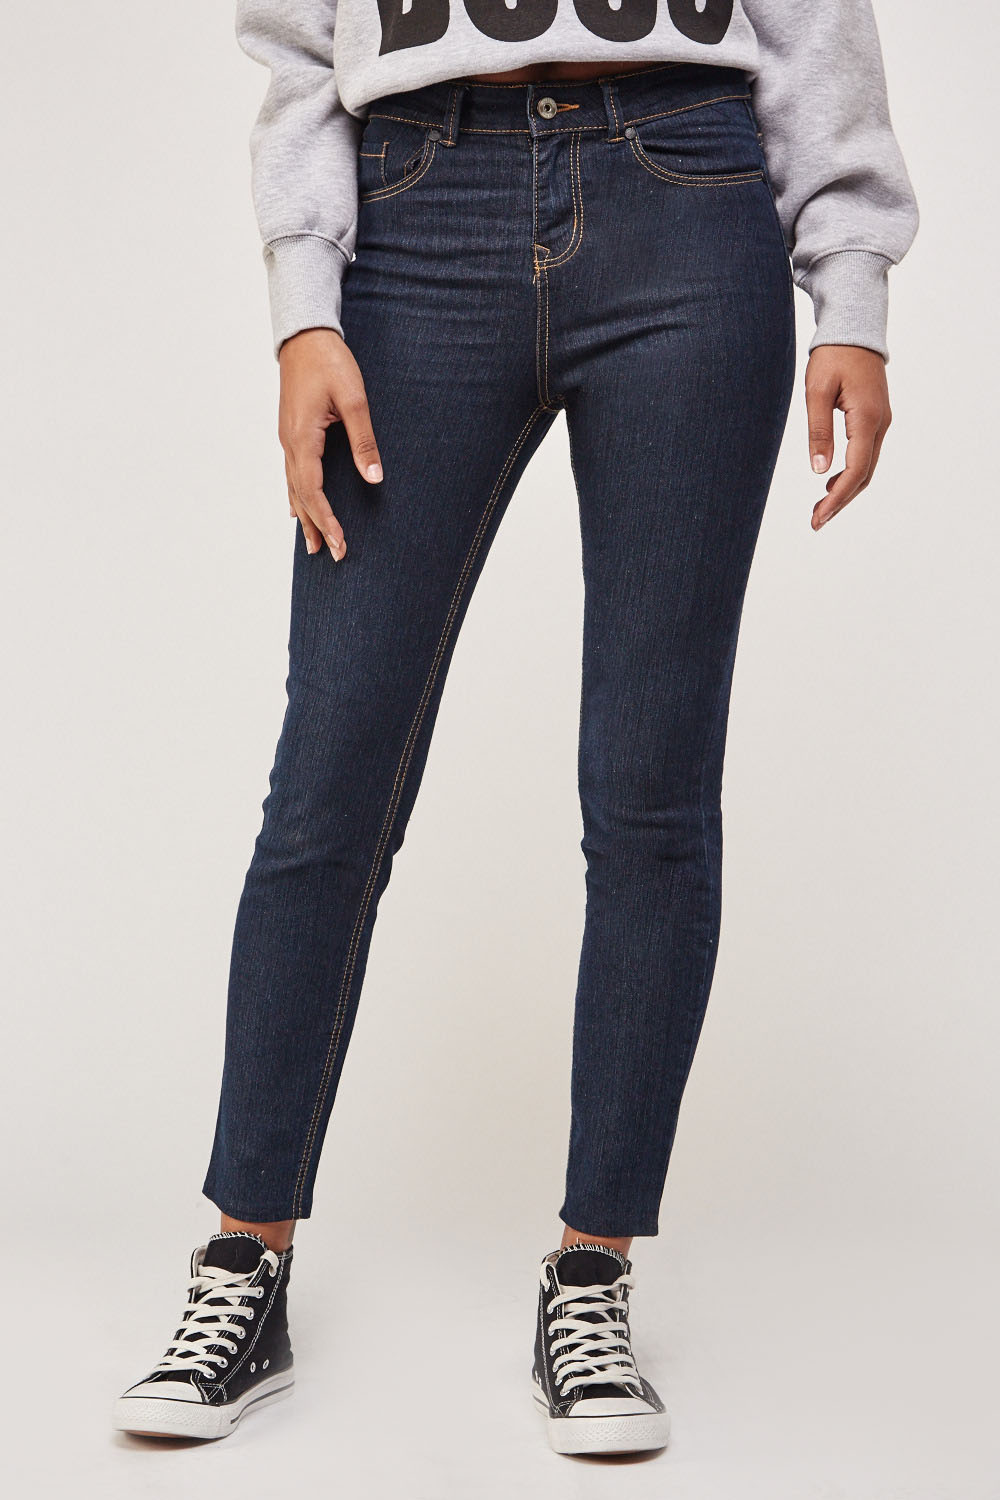 Skinny Ankle Length Denim Jeans - Just $3